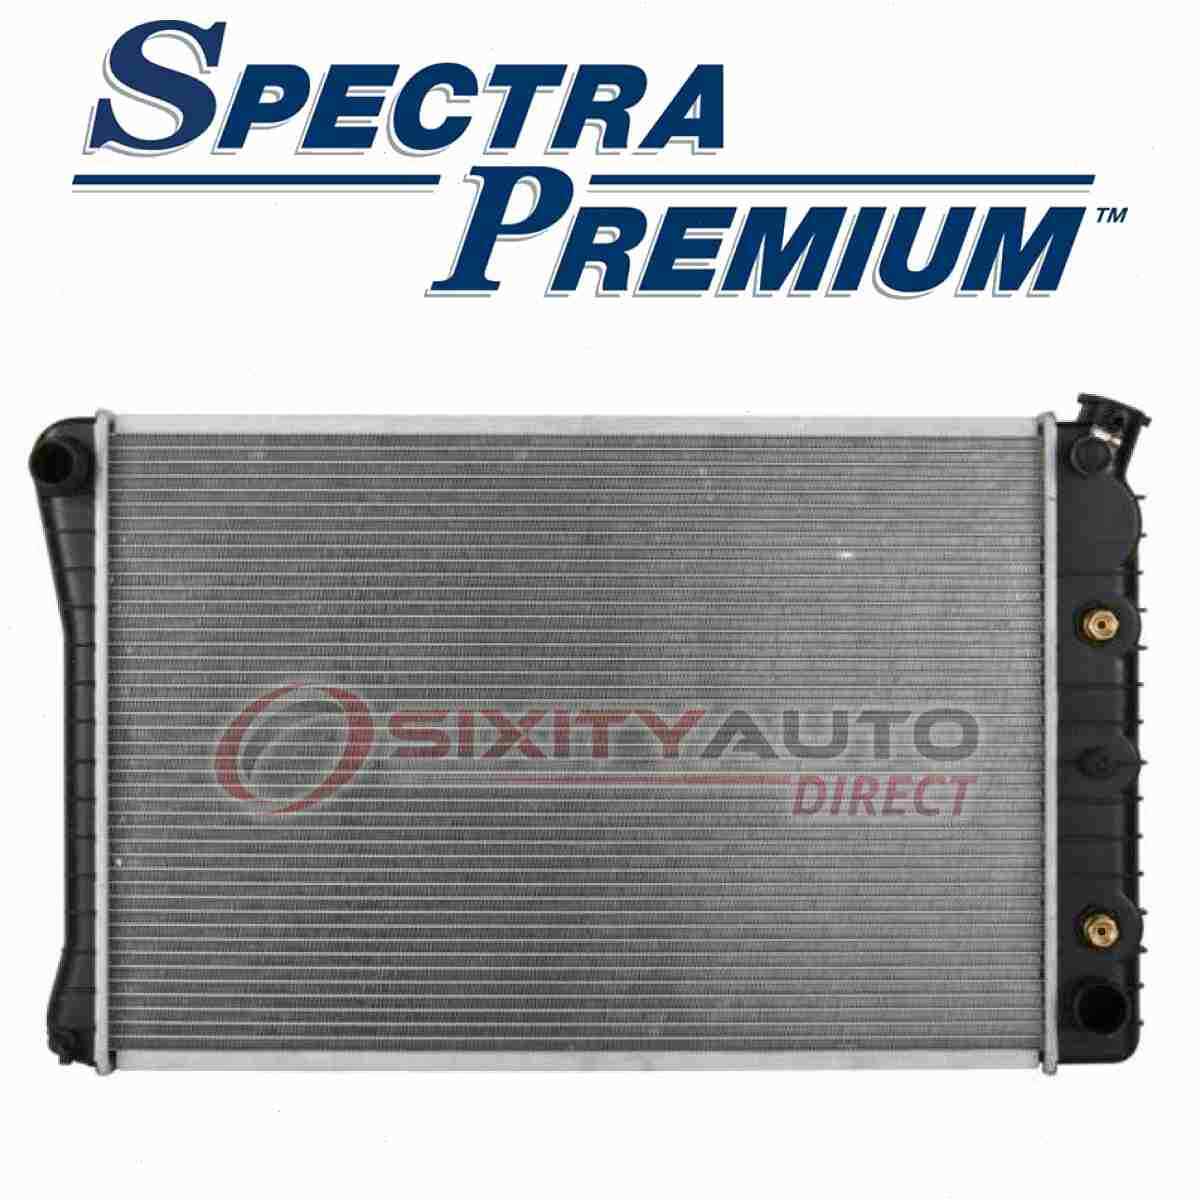 Spectra Premium Radiator for 1978-1988 Oldsmobile Cutlass Supreme 4.3L 5.7L am